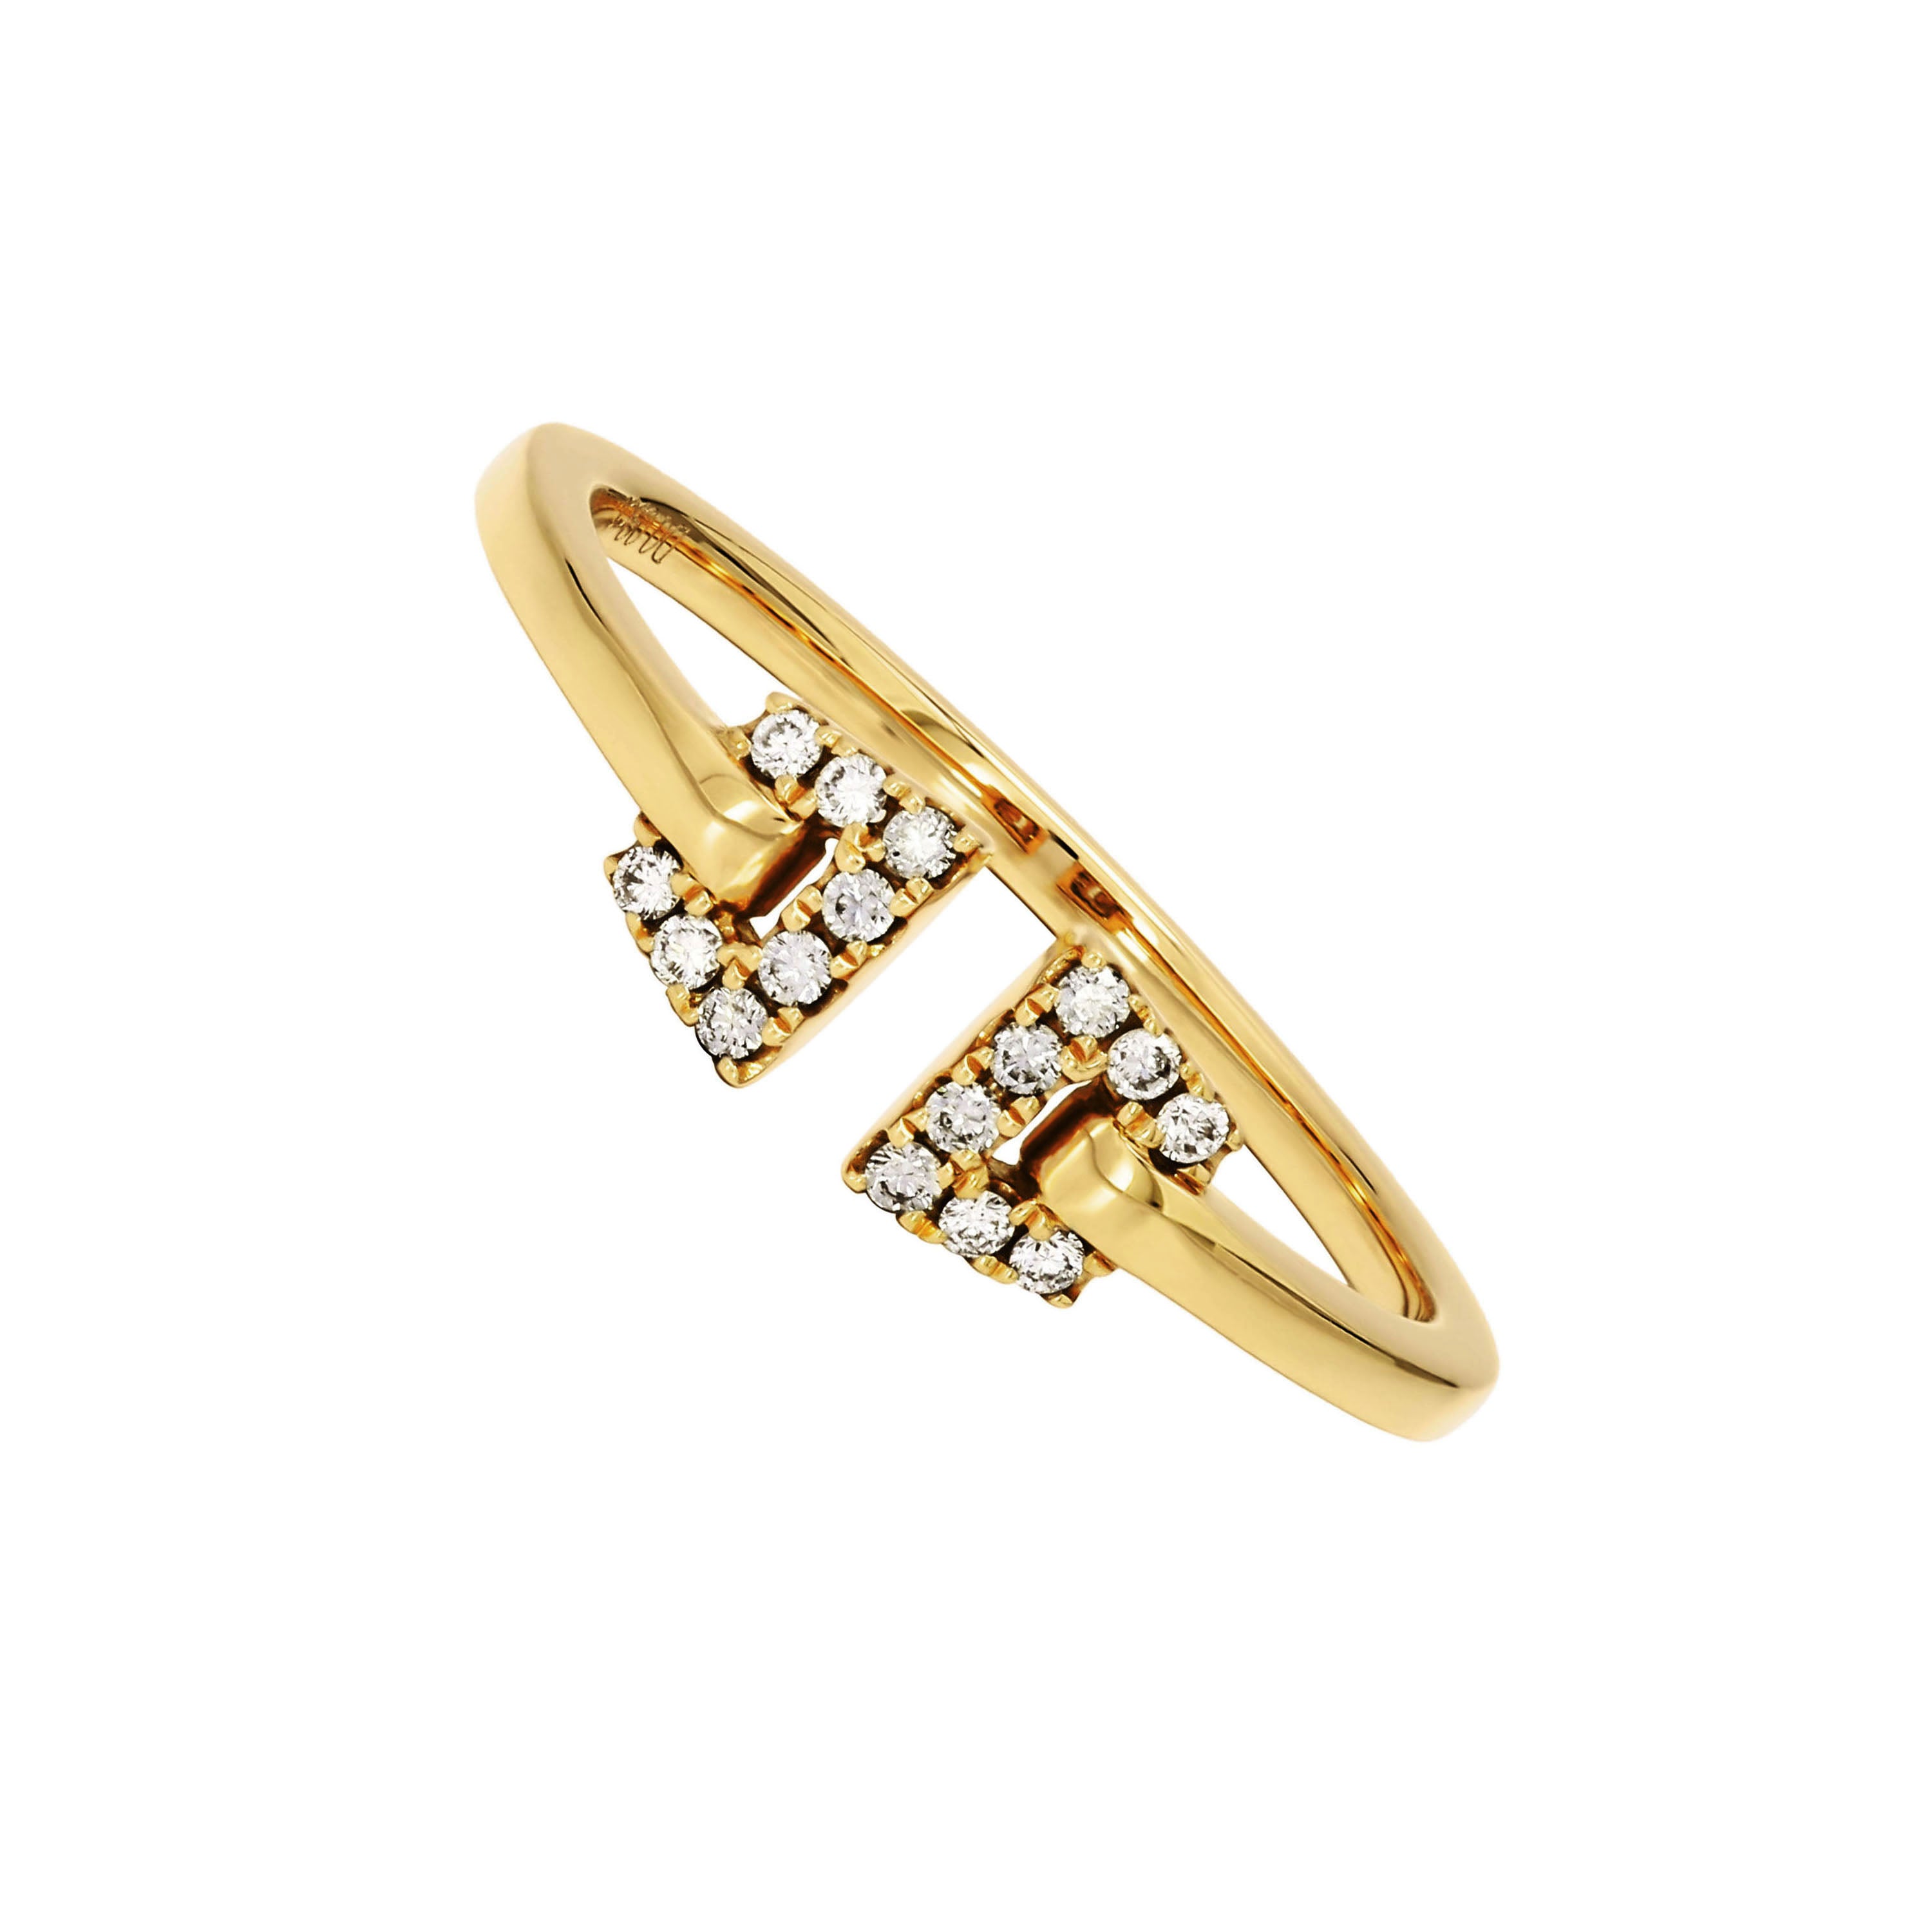 Adamar Jewels Stirrups Ring in 18K yellow gold set with diamonds